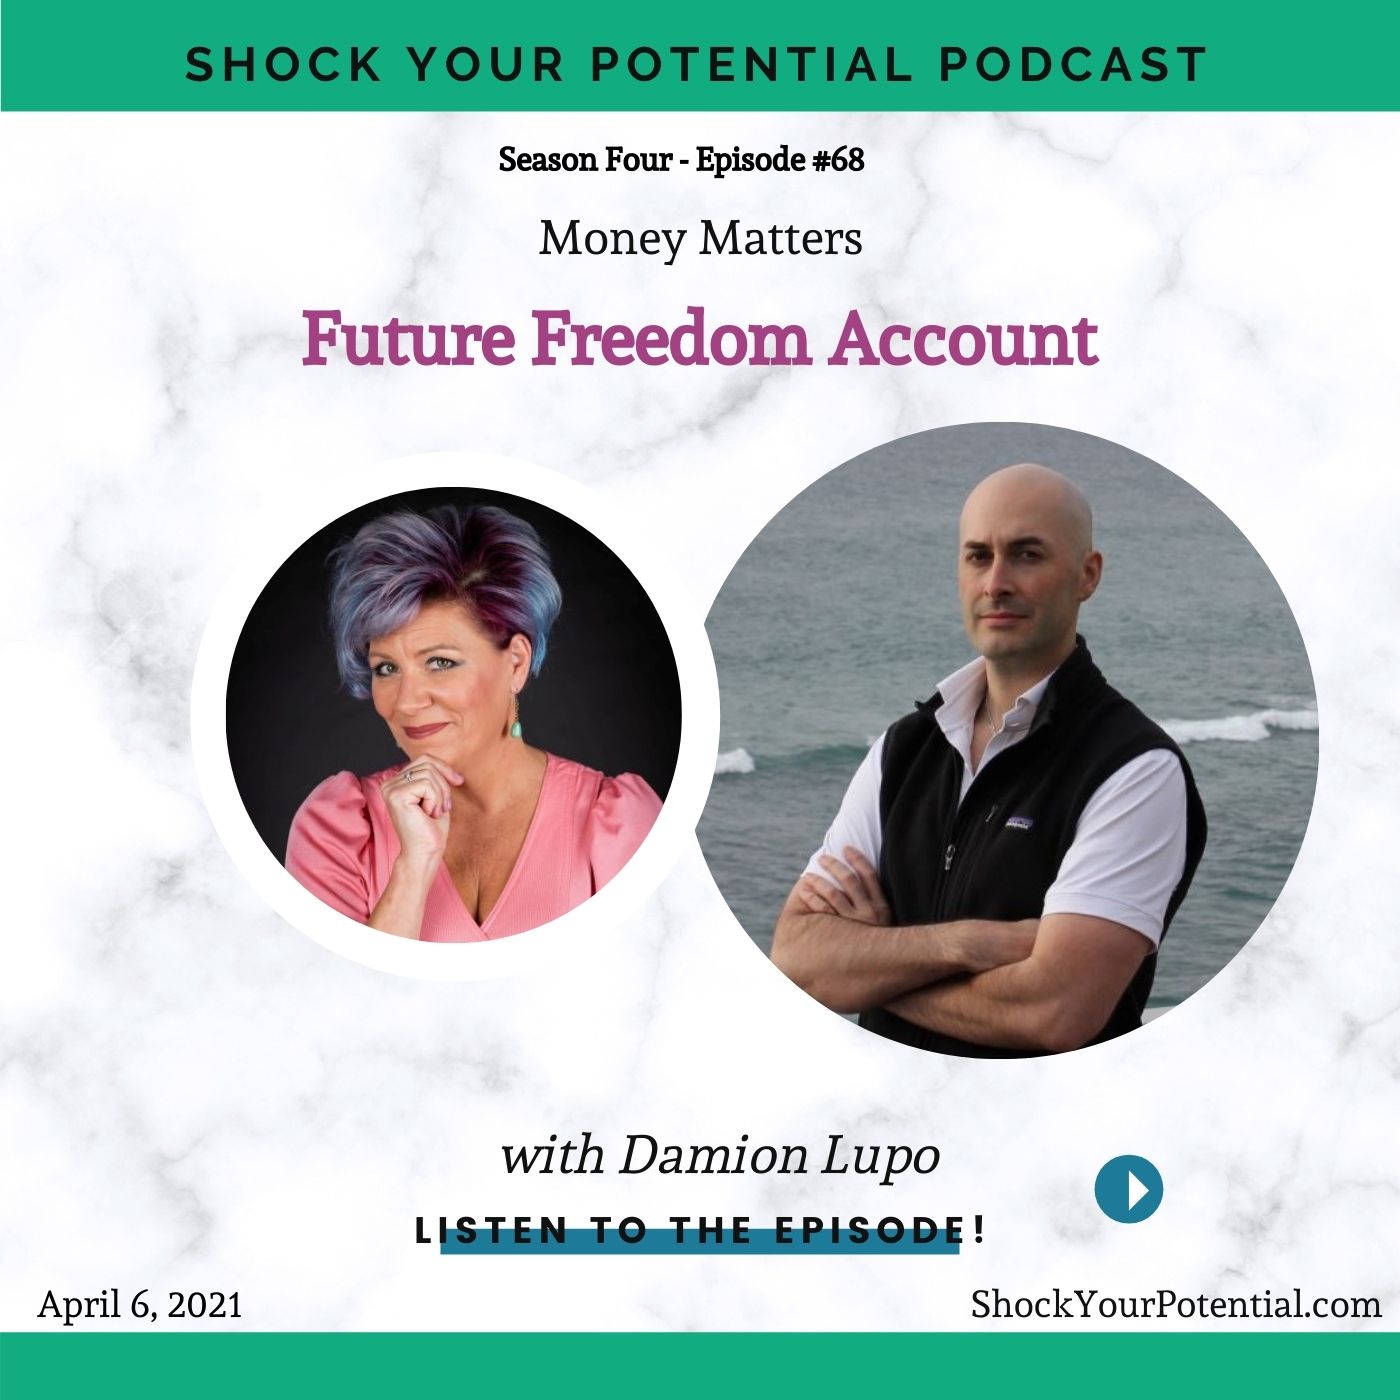 Future Freedom Account – Damion Lupo